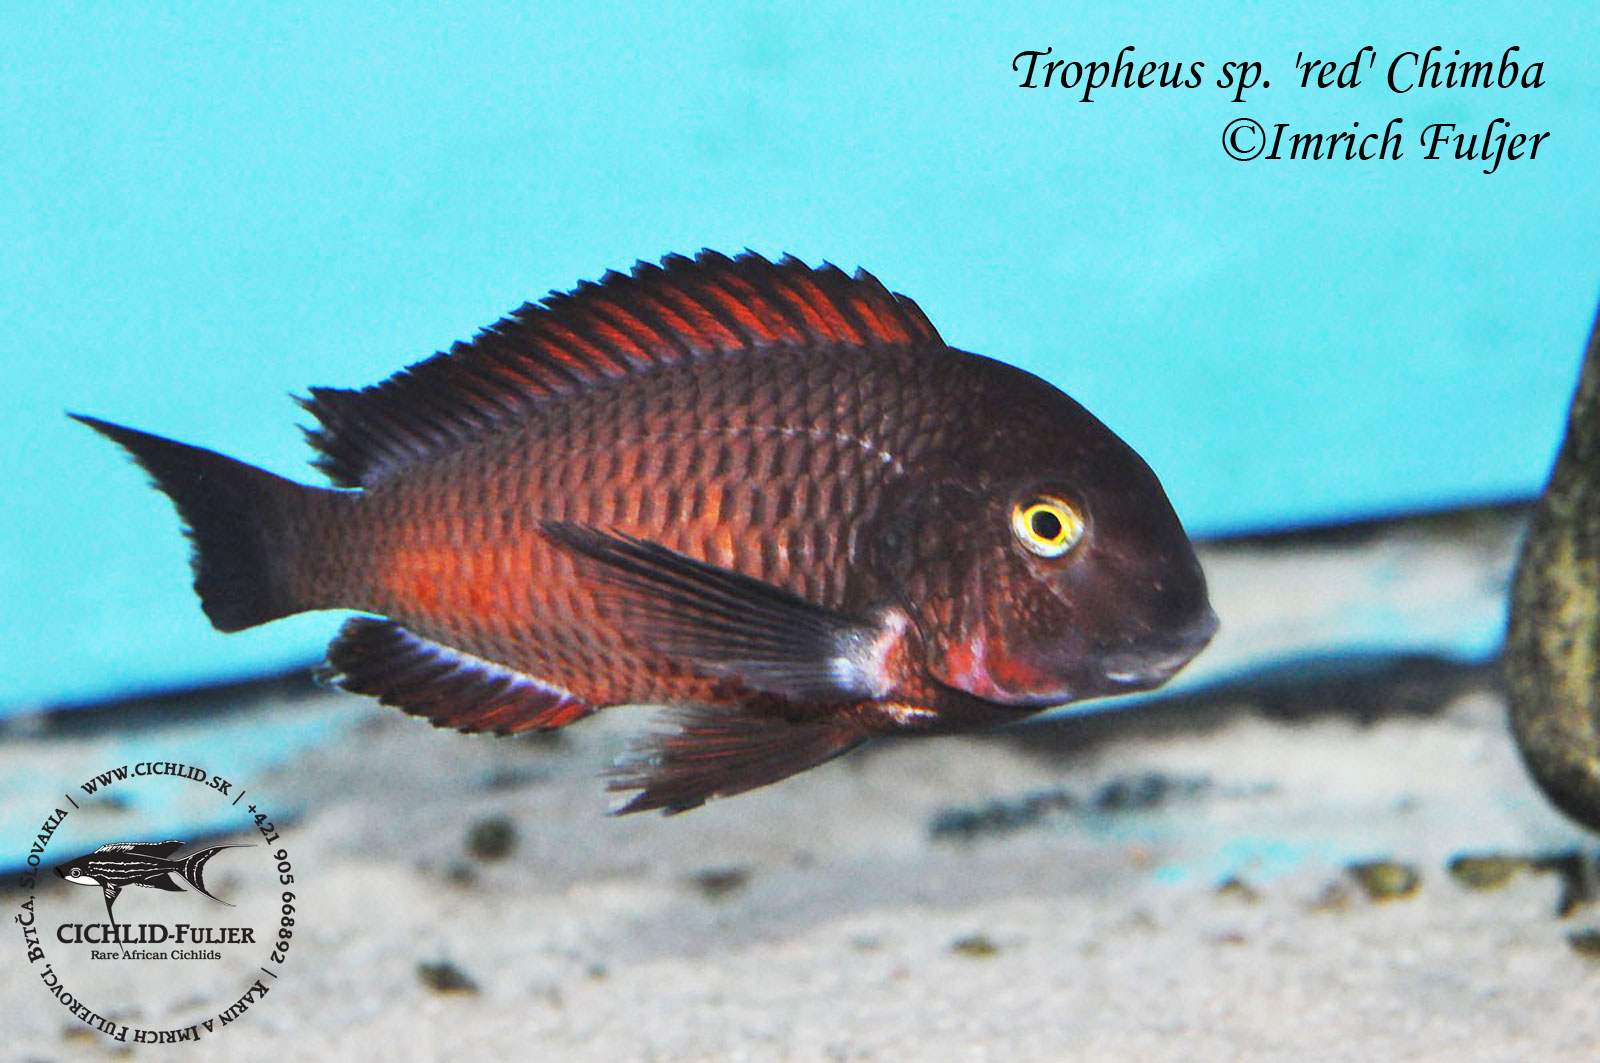 Tropheus sp. red Chimba 6